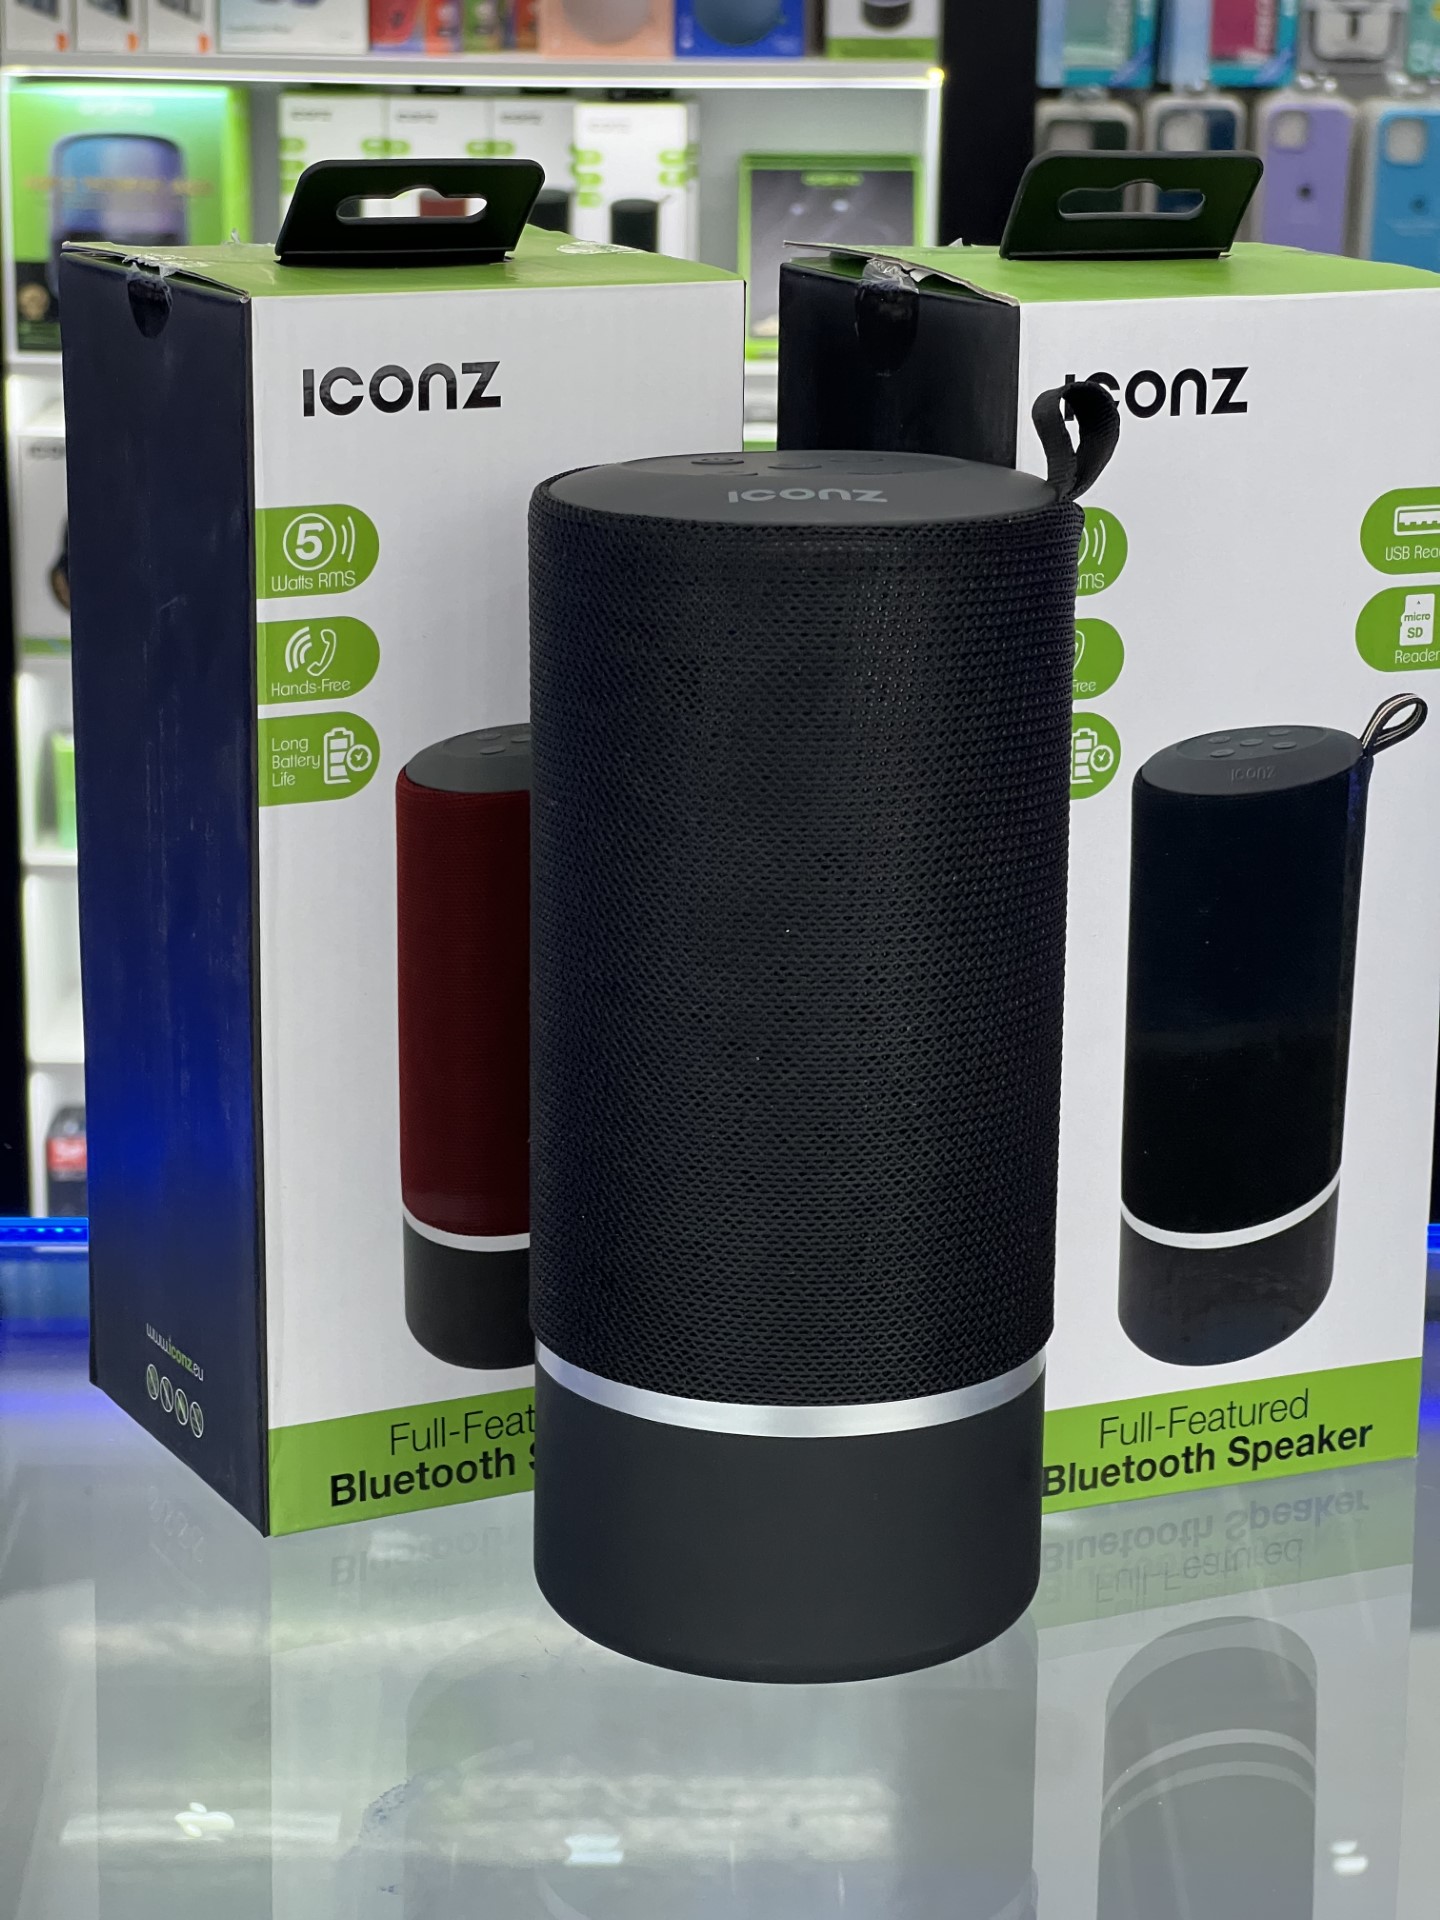 Iconz Full Featured Bluetooth Speaker